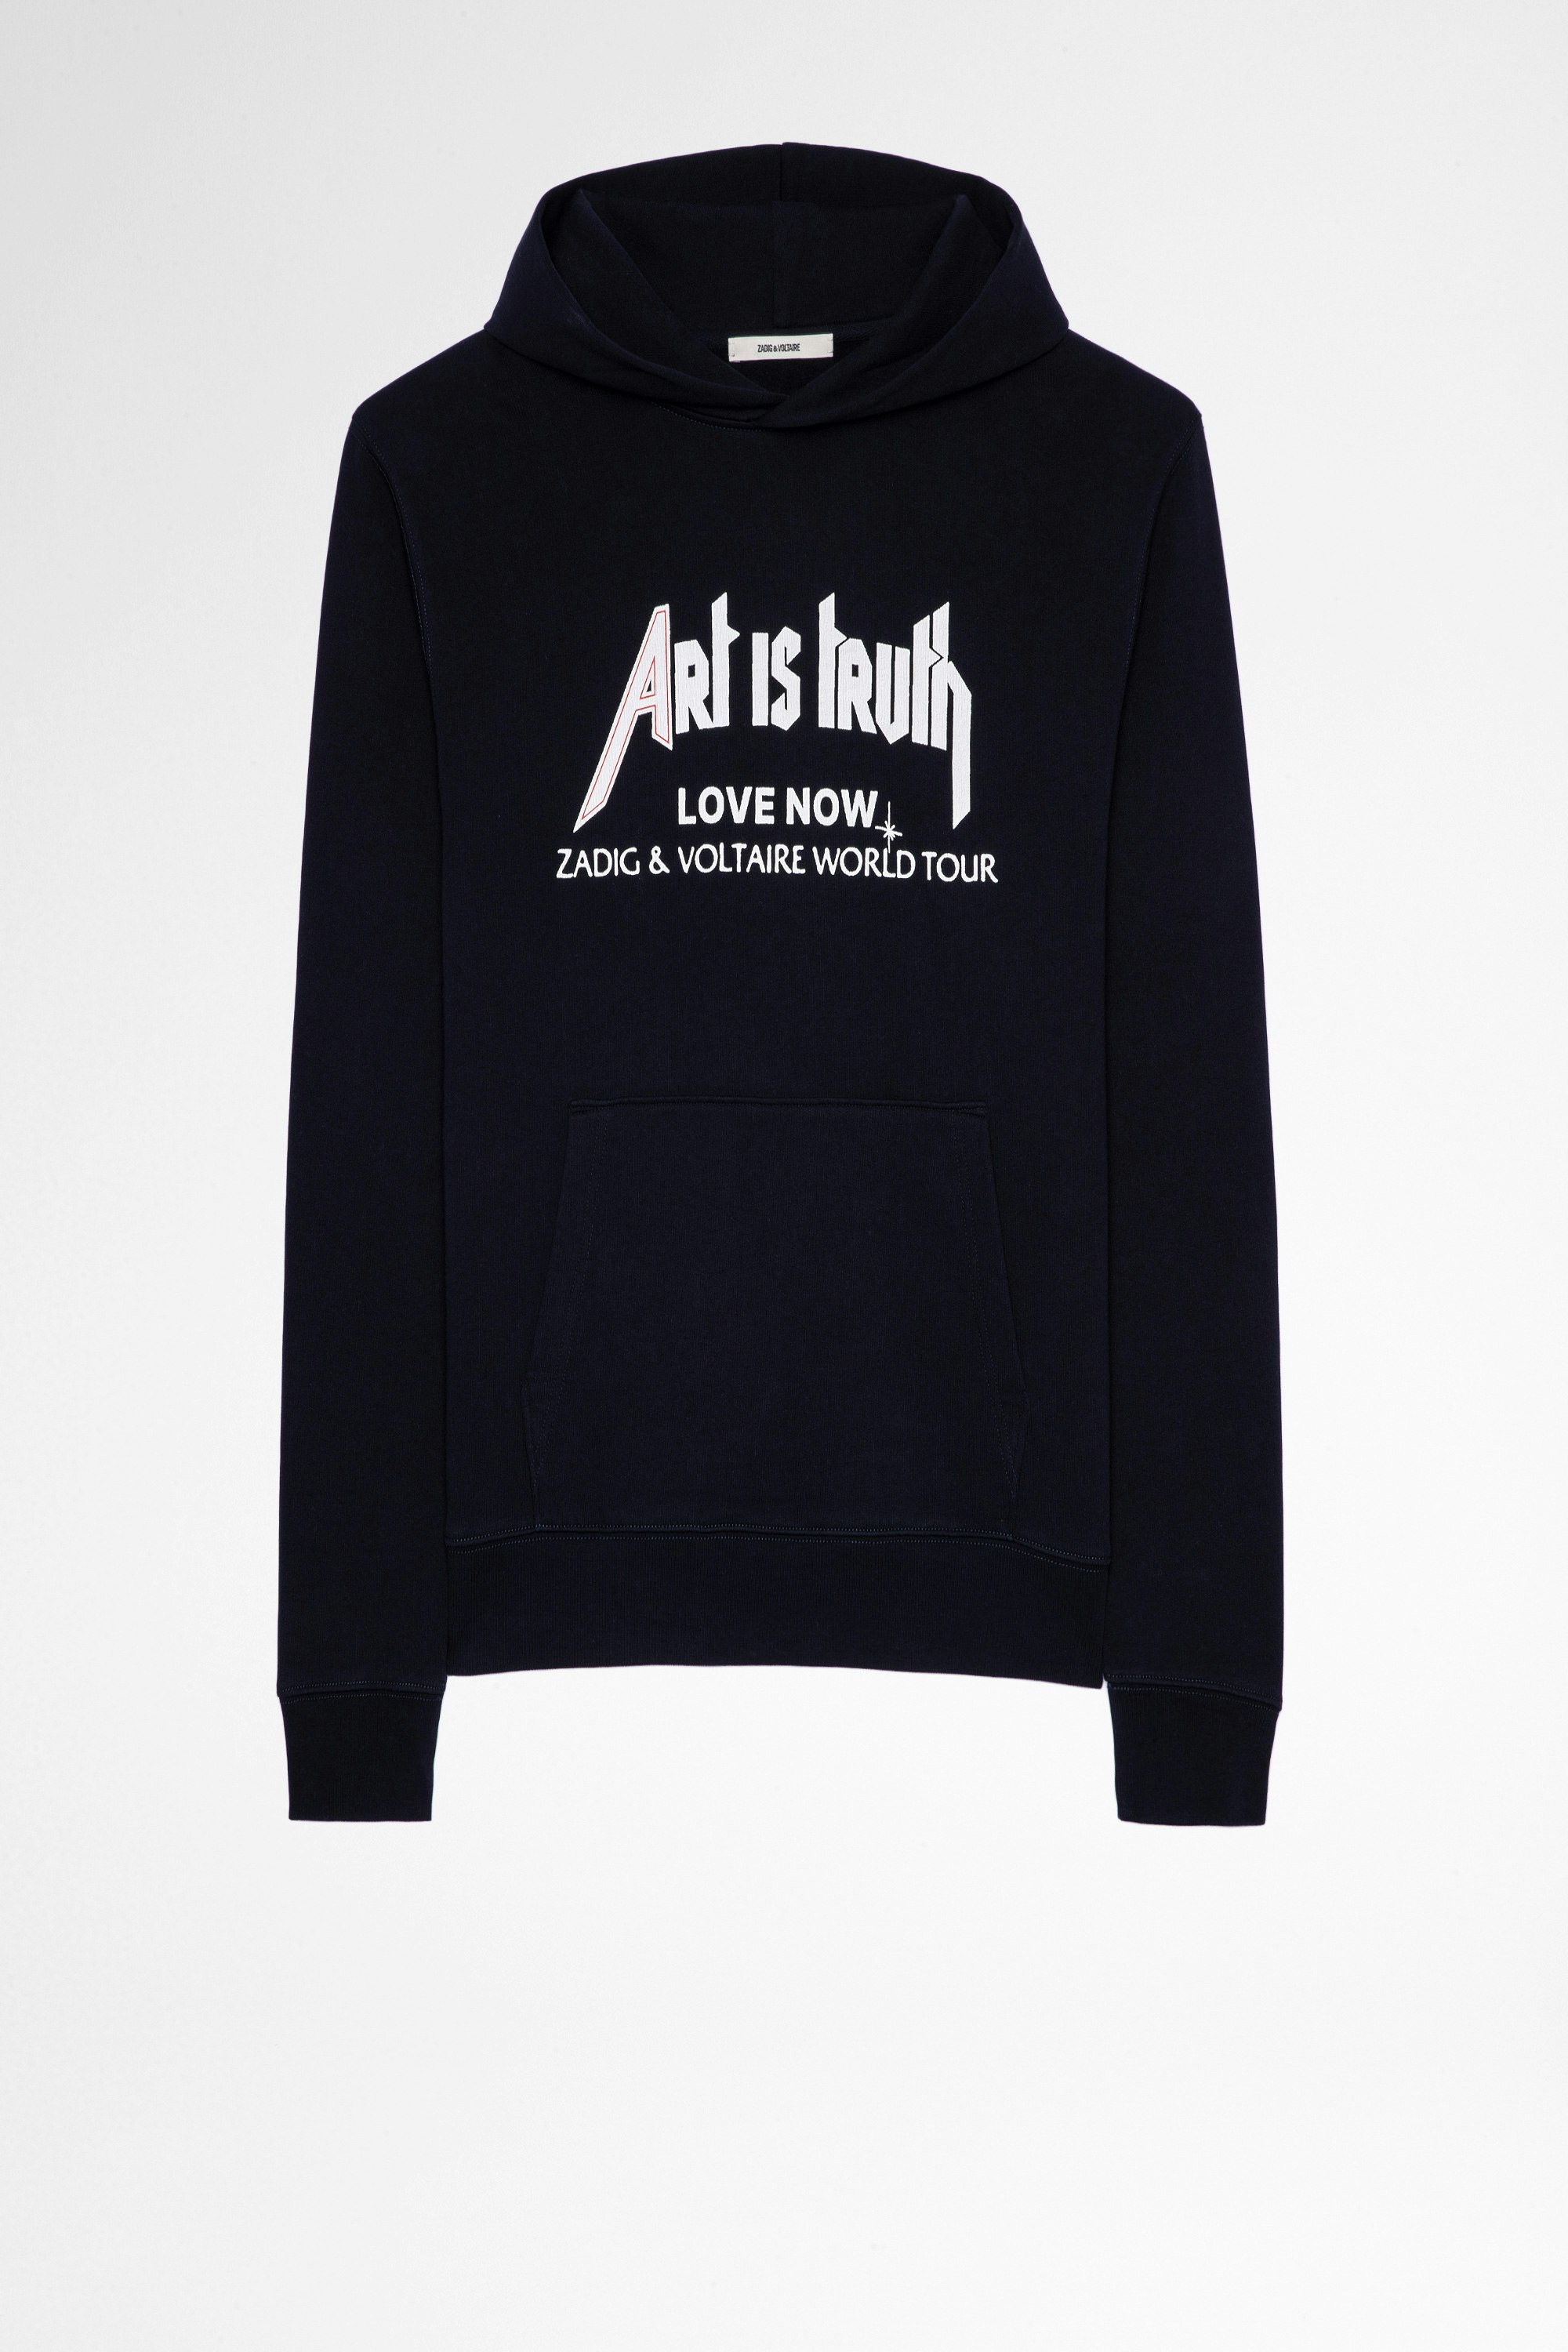 Sanchi Sweatshirt Men's Art is truth print hoodie. Made with fibers from organic farming.